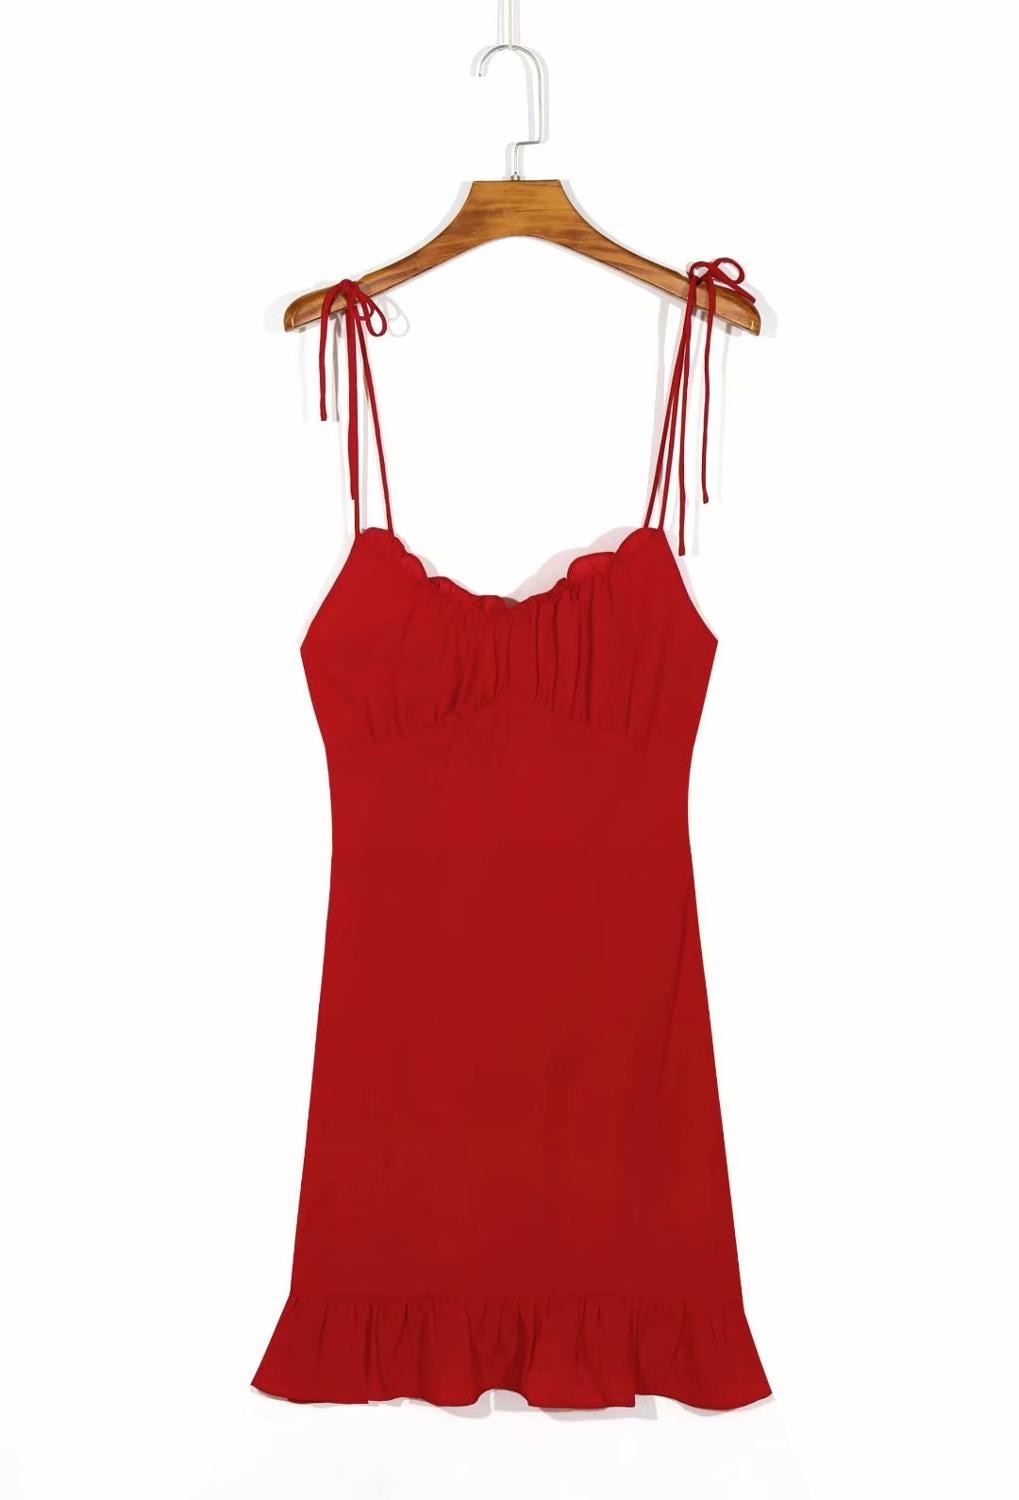 Chicdear Retro Ruffles Mini Dress Women Adjustable Spaghetti Straps Red Black Elastic Holiday Fashion Summer Dress